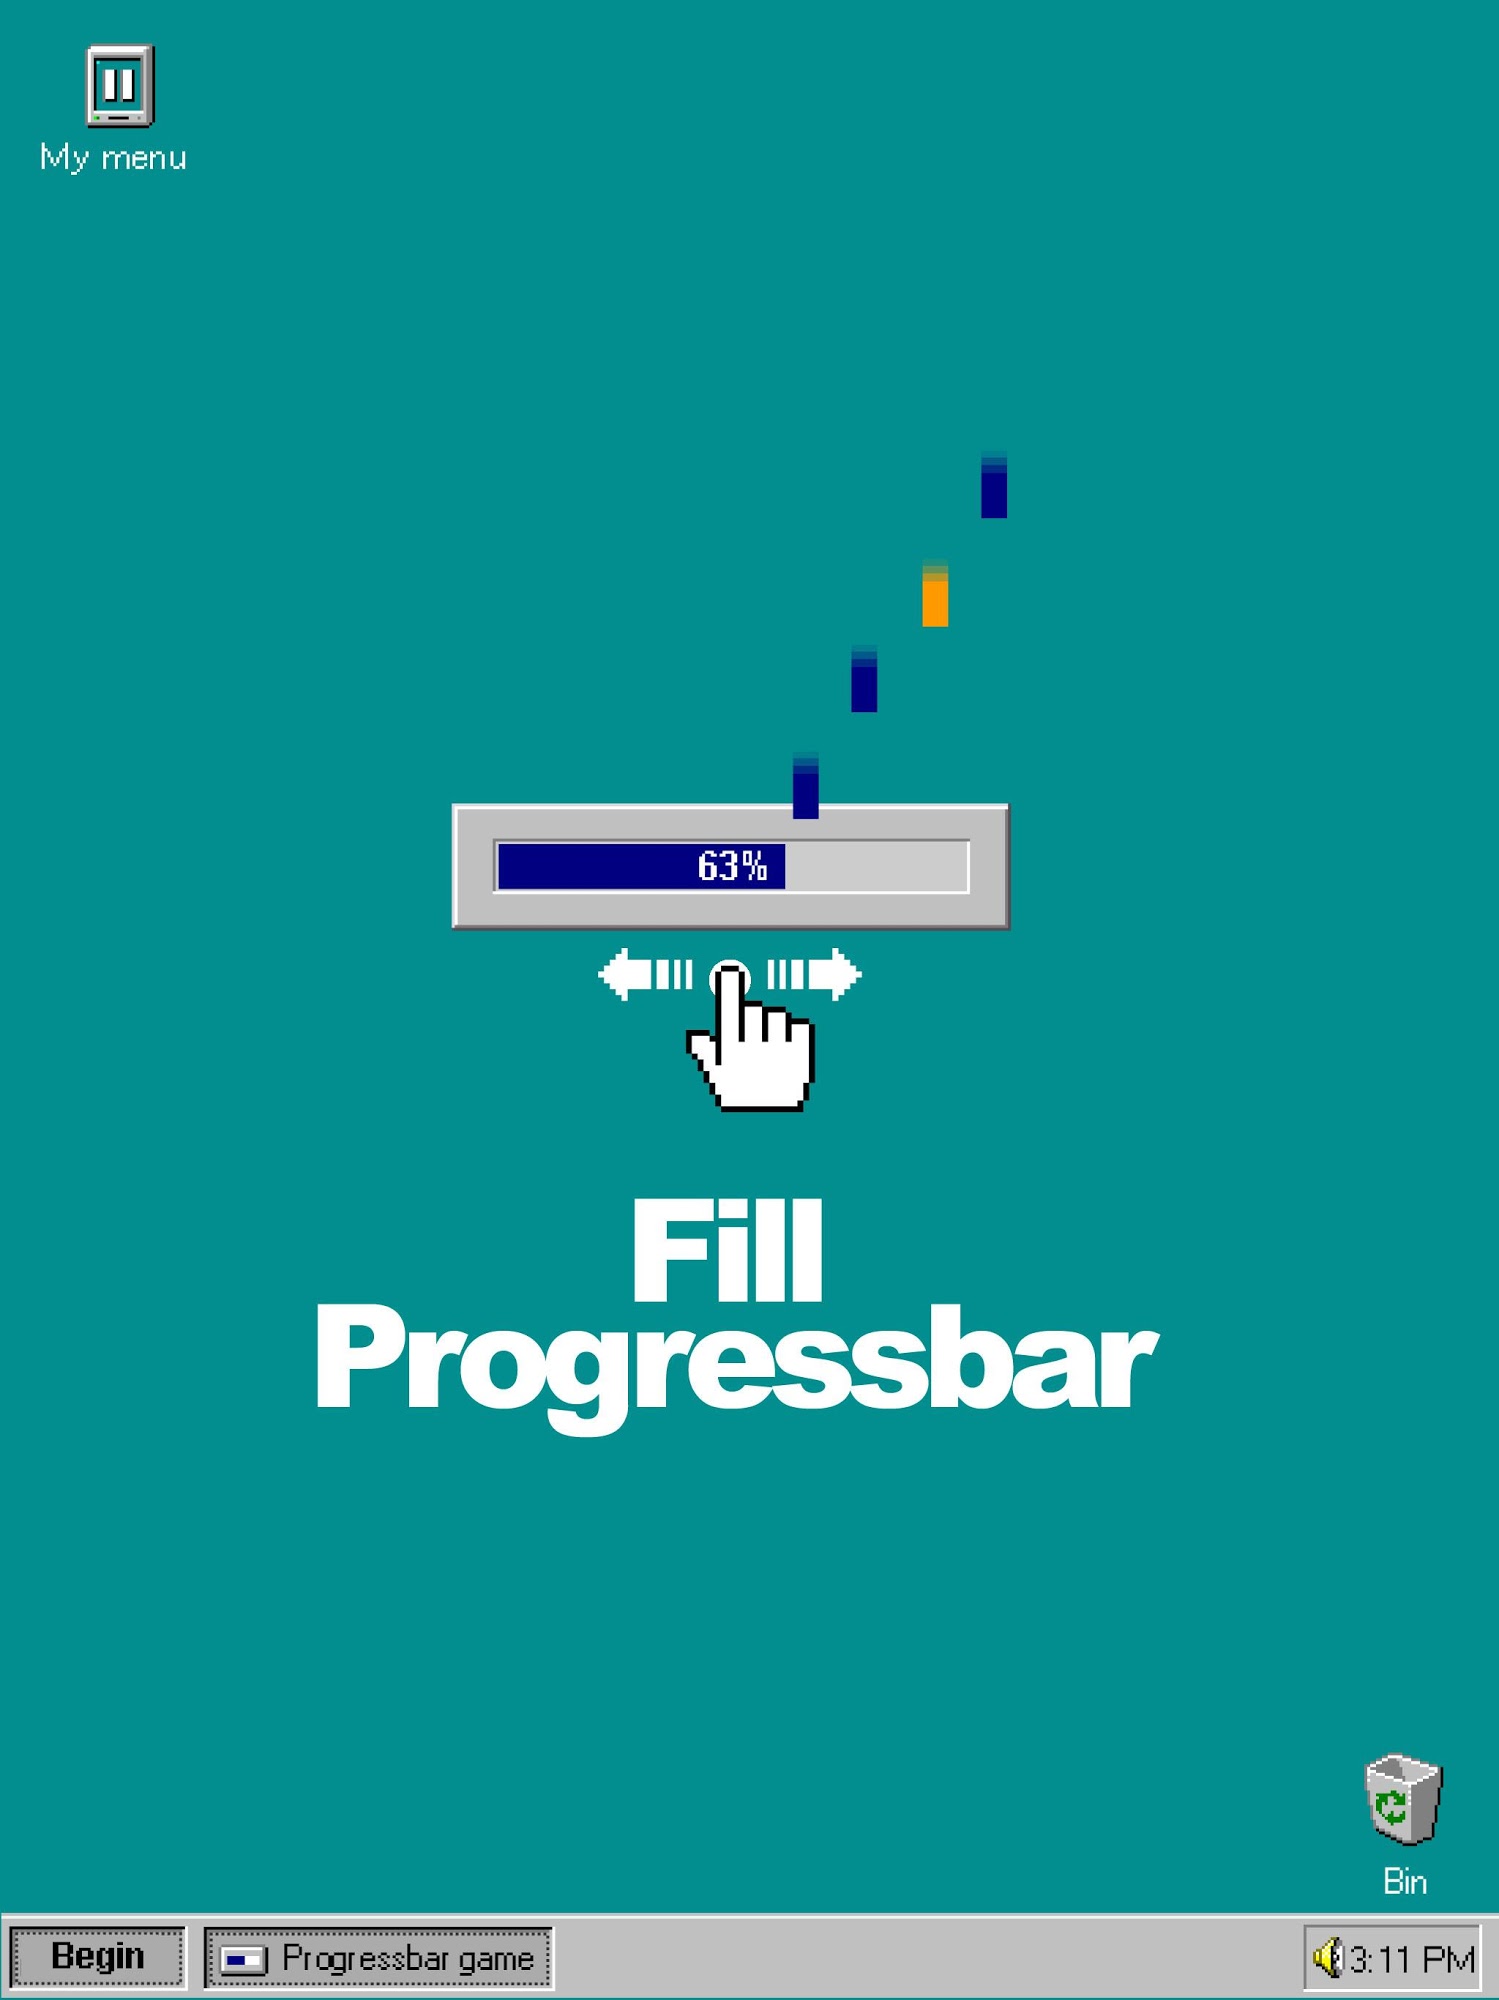 Progressbar95 - easy, nostalgic hyper-casual game for Android